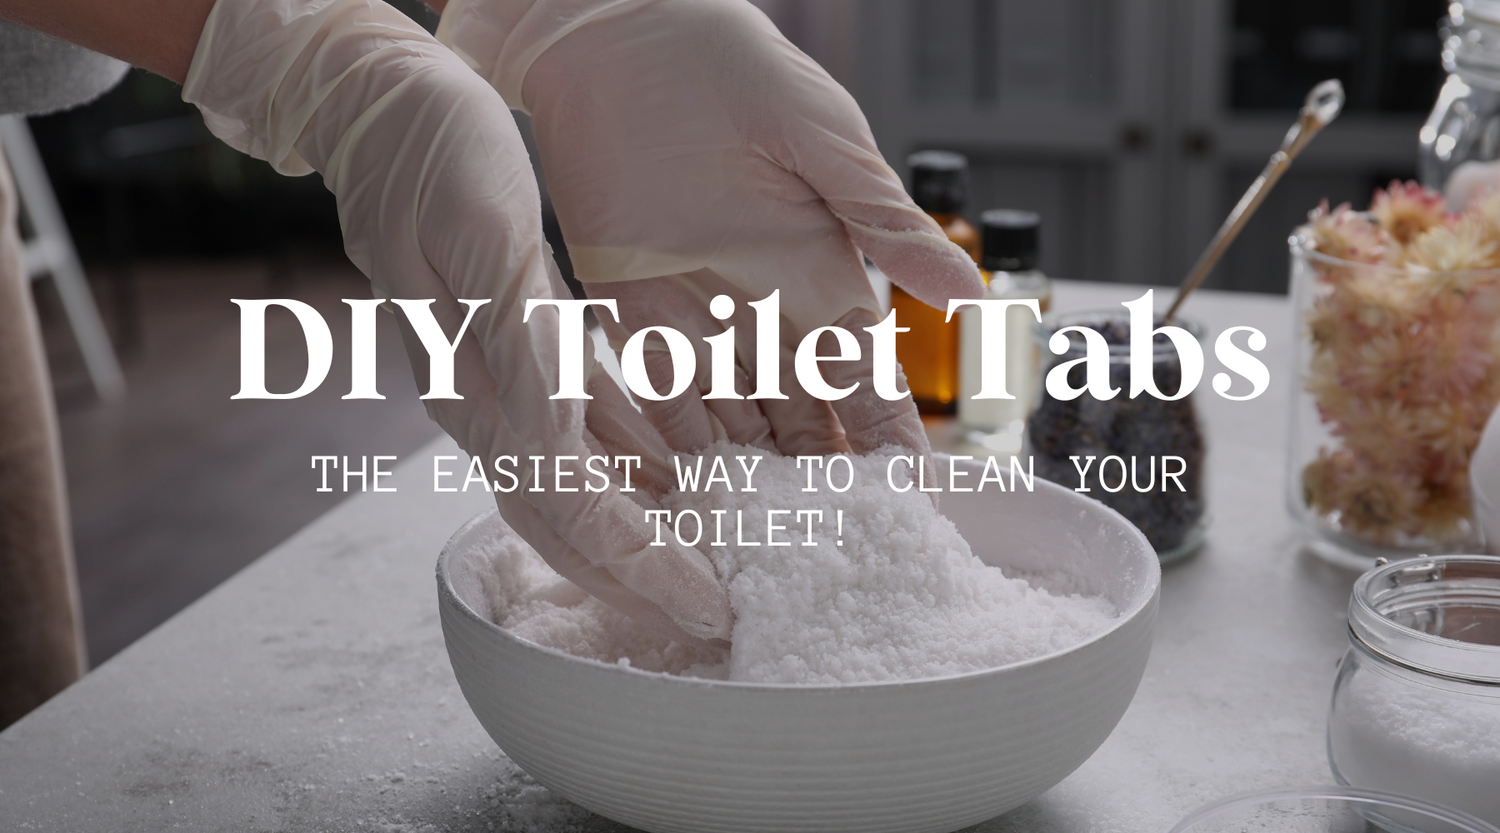 DIY Toilet Tabs Blog Cover Photo